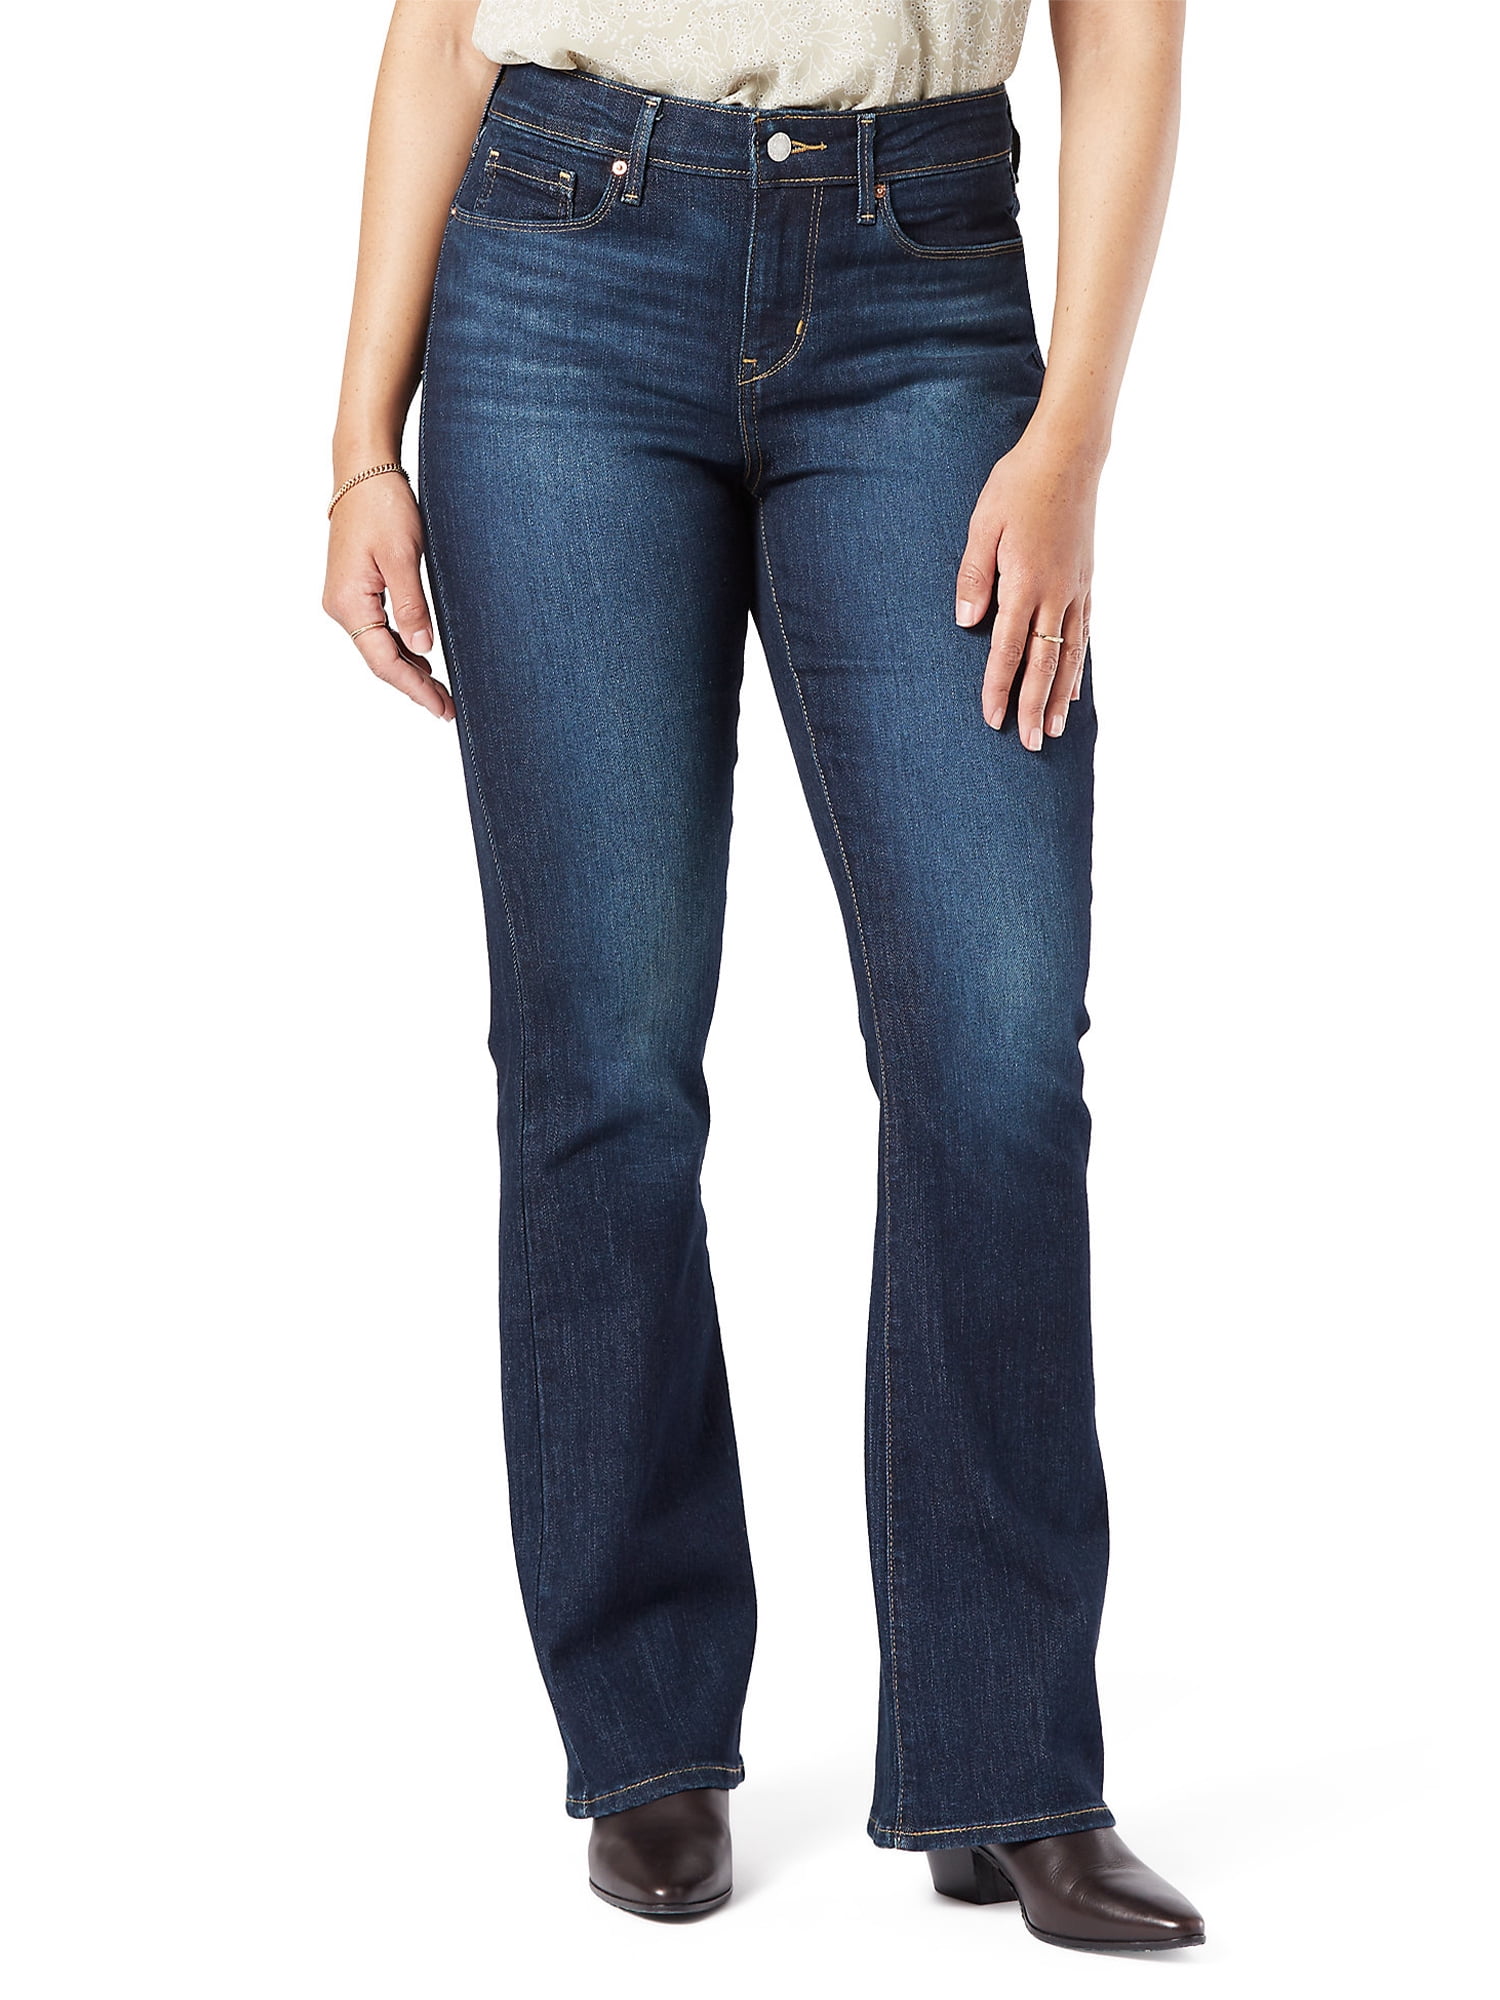 Mens Levi Strauss & Co 505 Gray Jeans Pants Size 42 x 30 | eBay